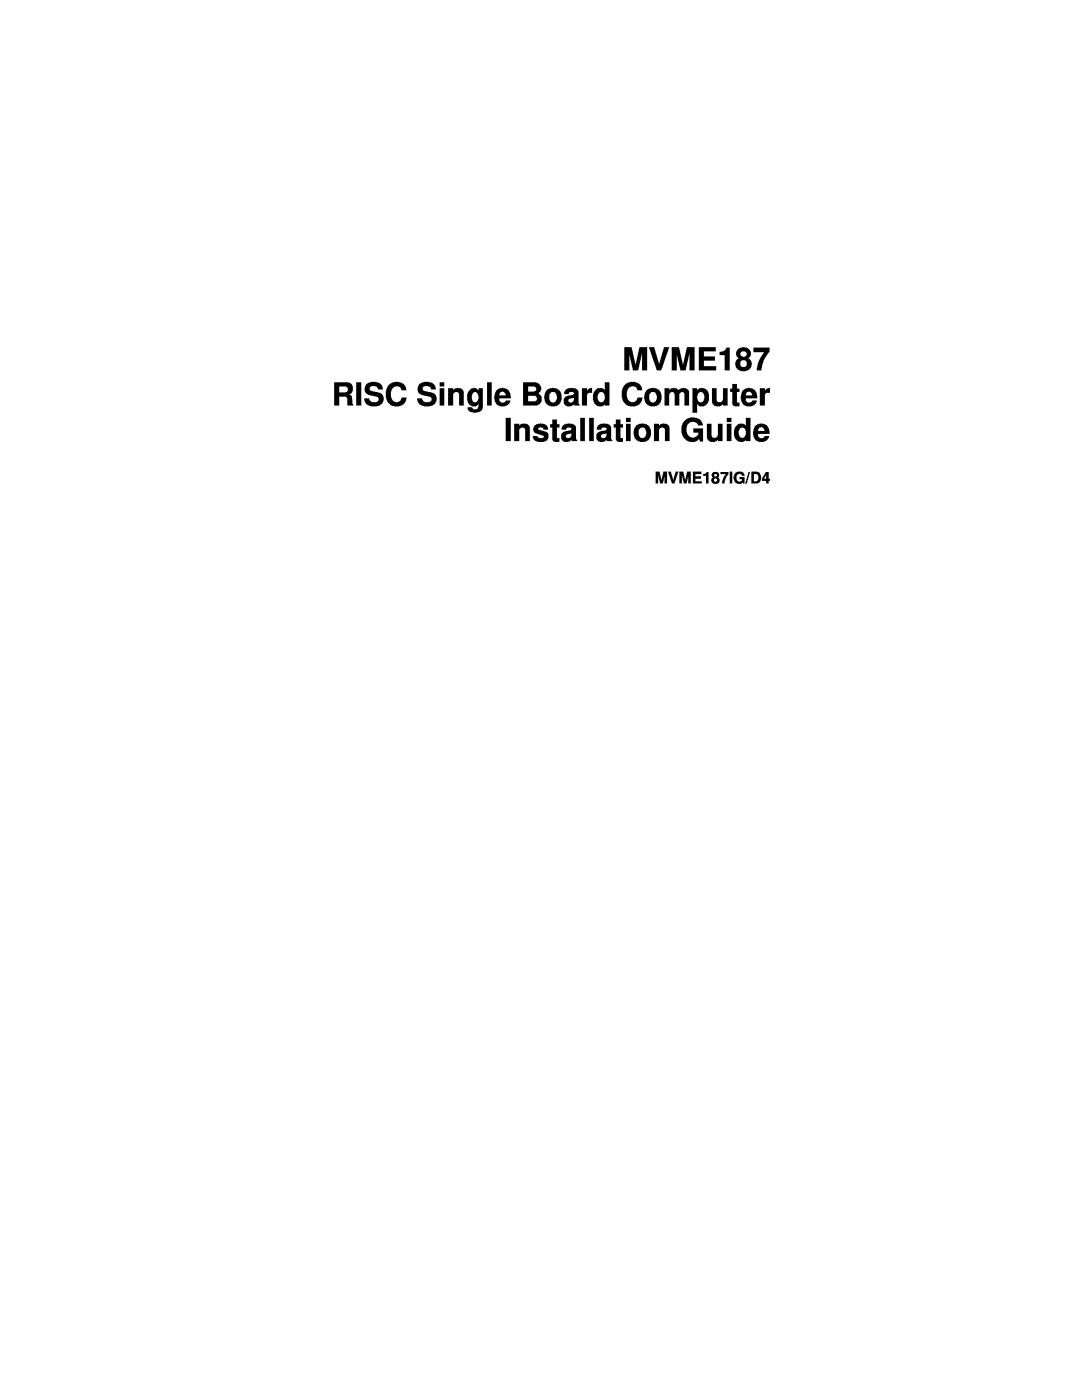 Motorola manual MVME187 RISC Single Board Computer Installation Guide, MVME187IG/D4 